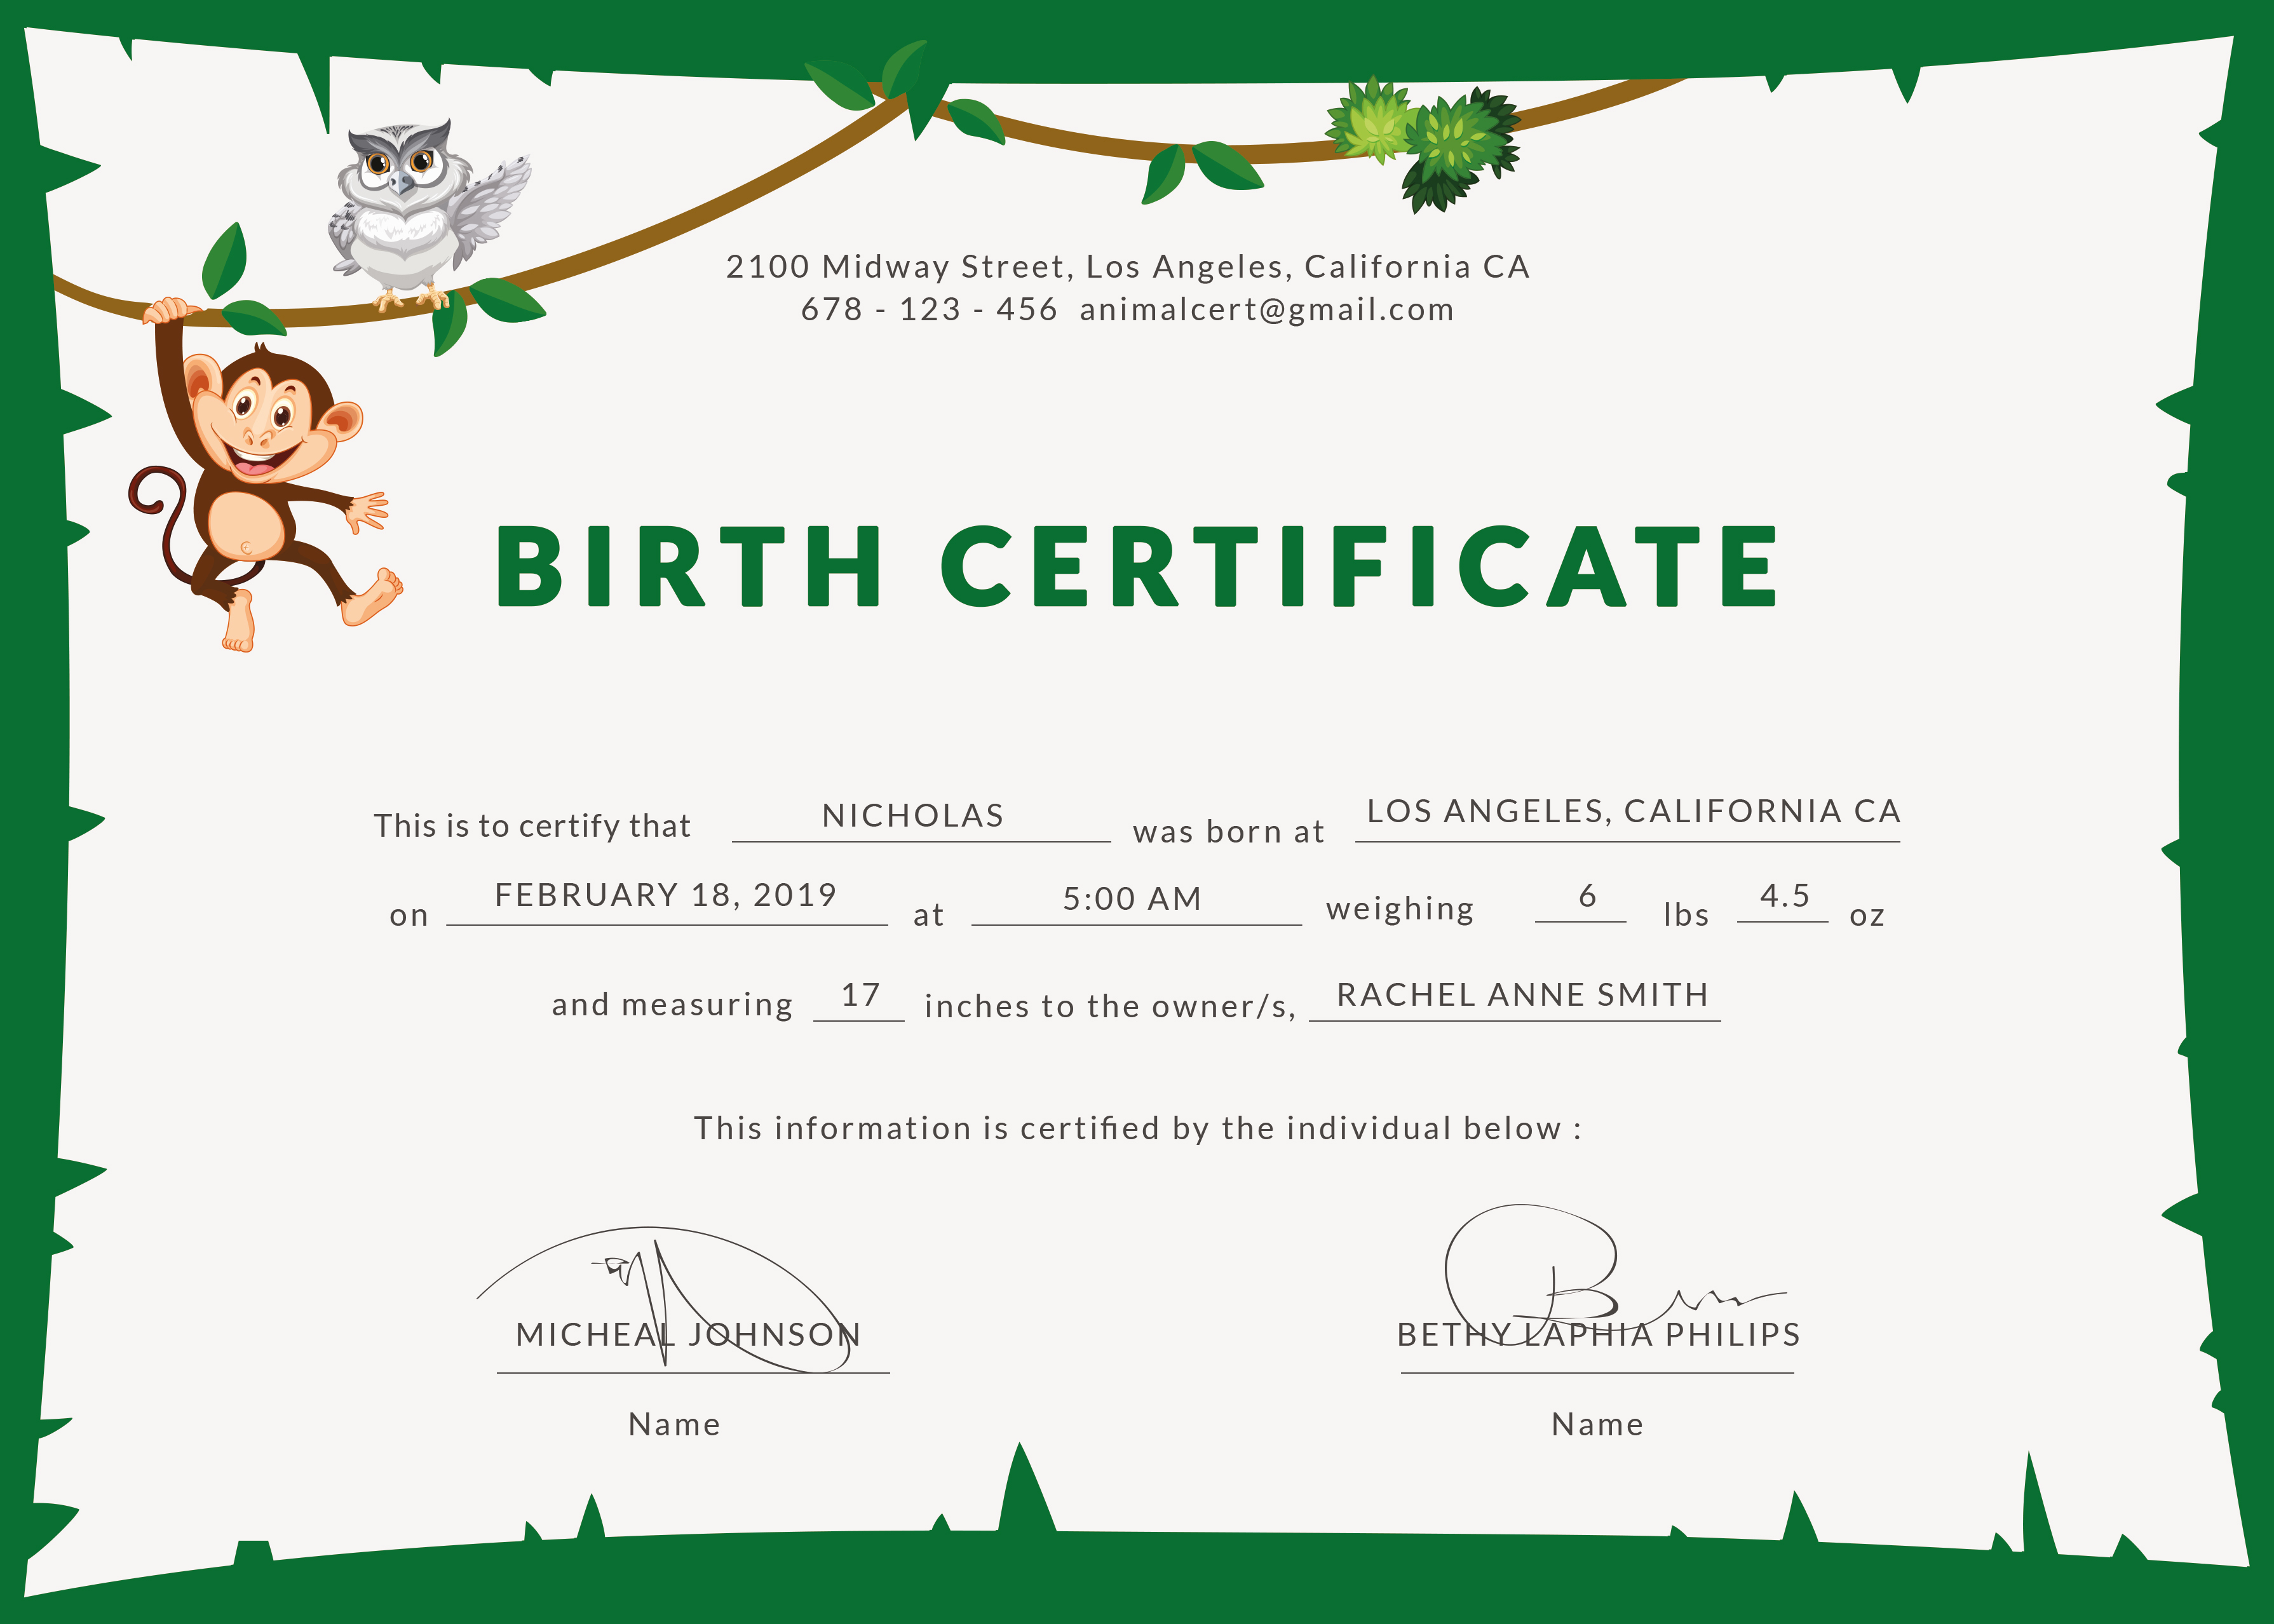 certified copy of birth certificate tn